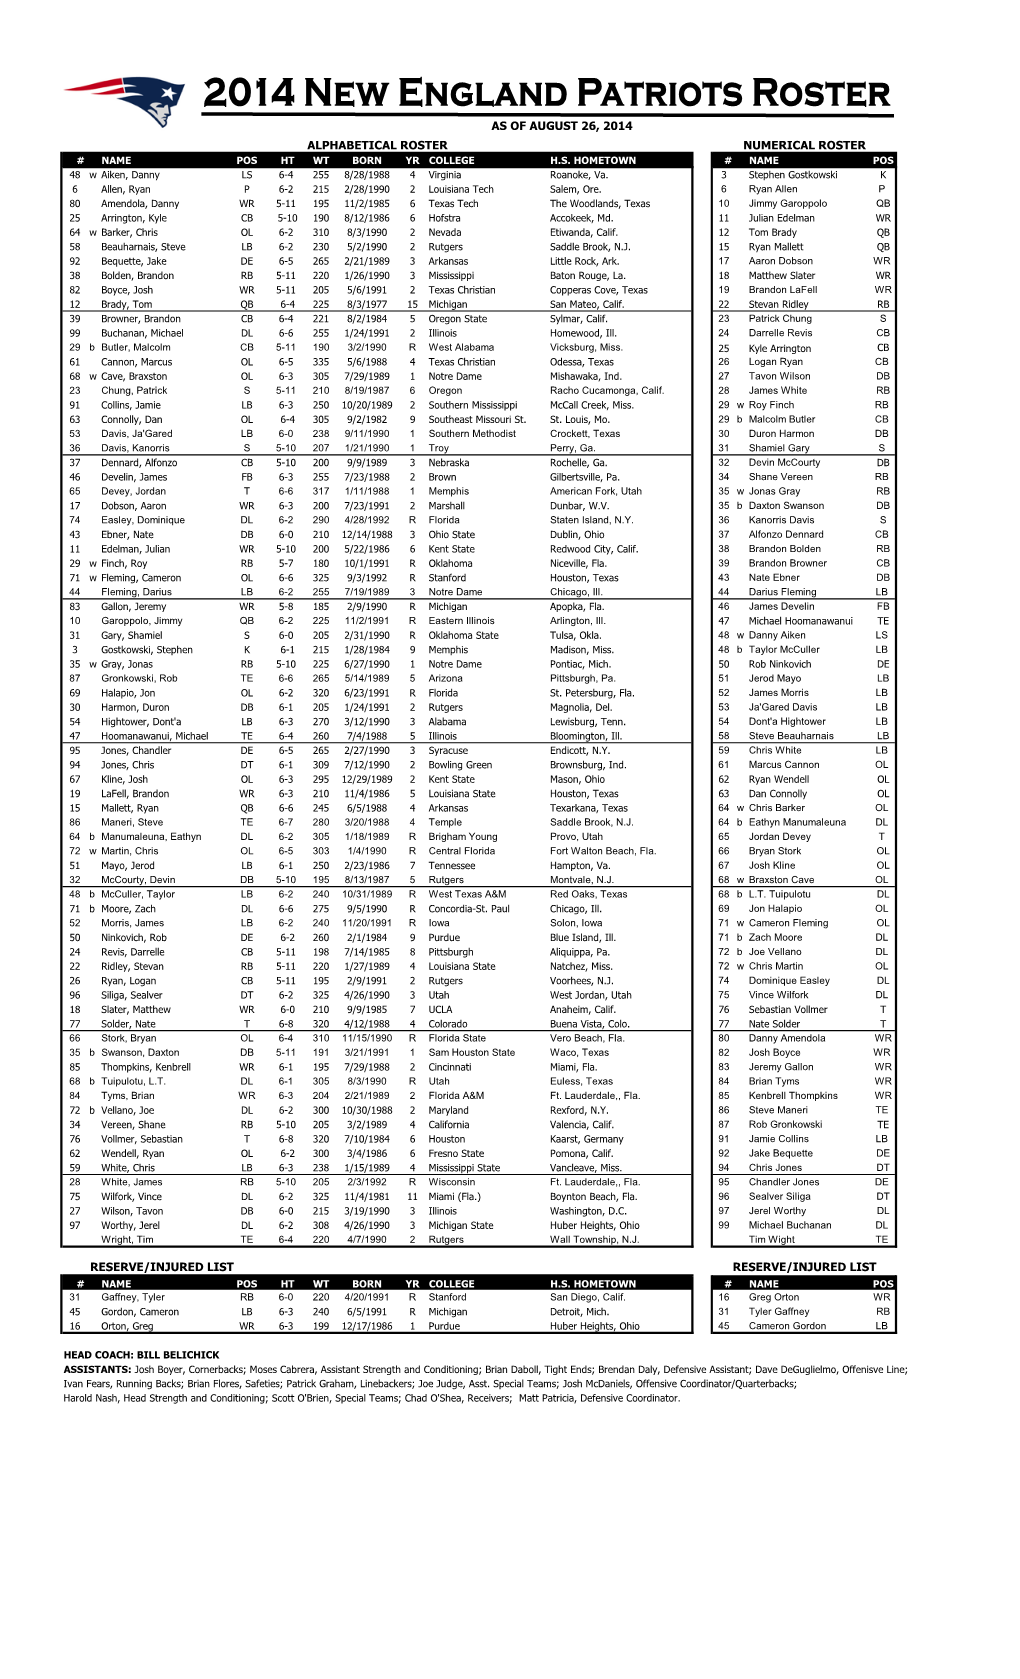 Reserve/Injured List Alphabetical Roster Numerical Roster As of August 26, 2014 Reserve/Injured List